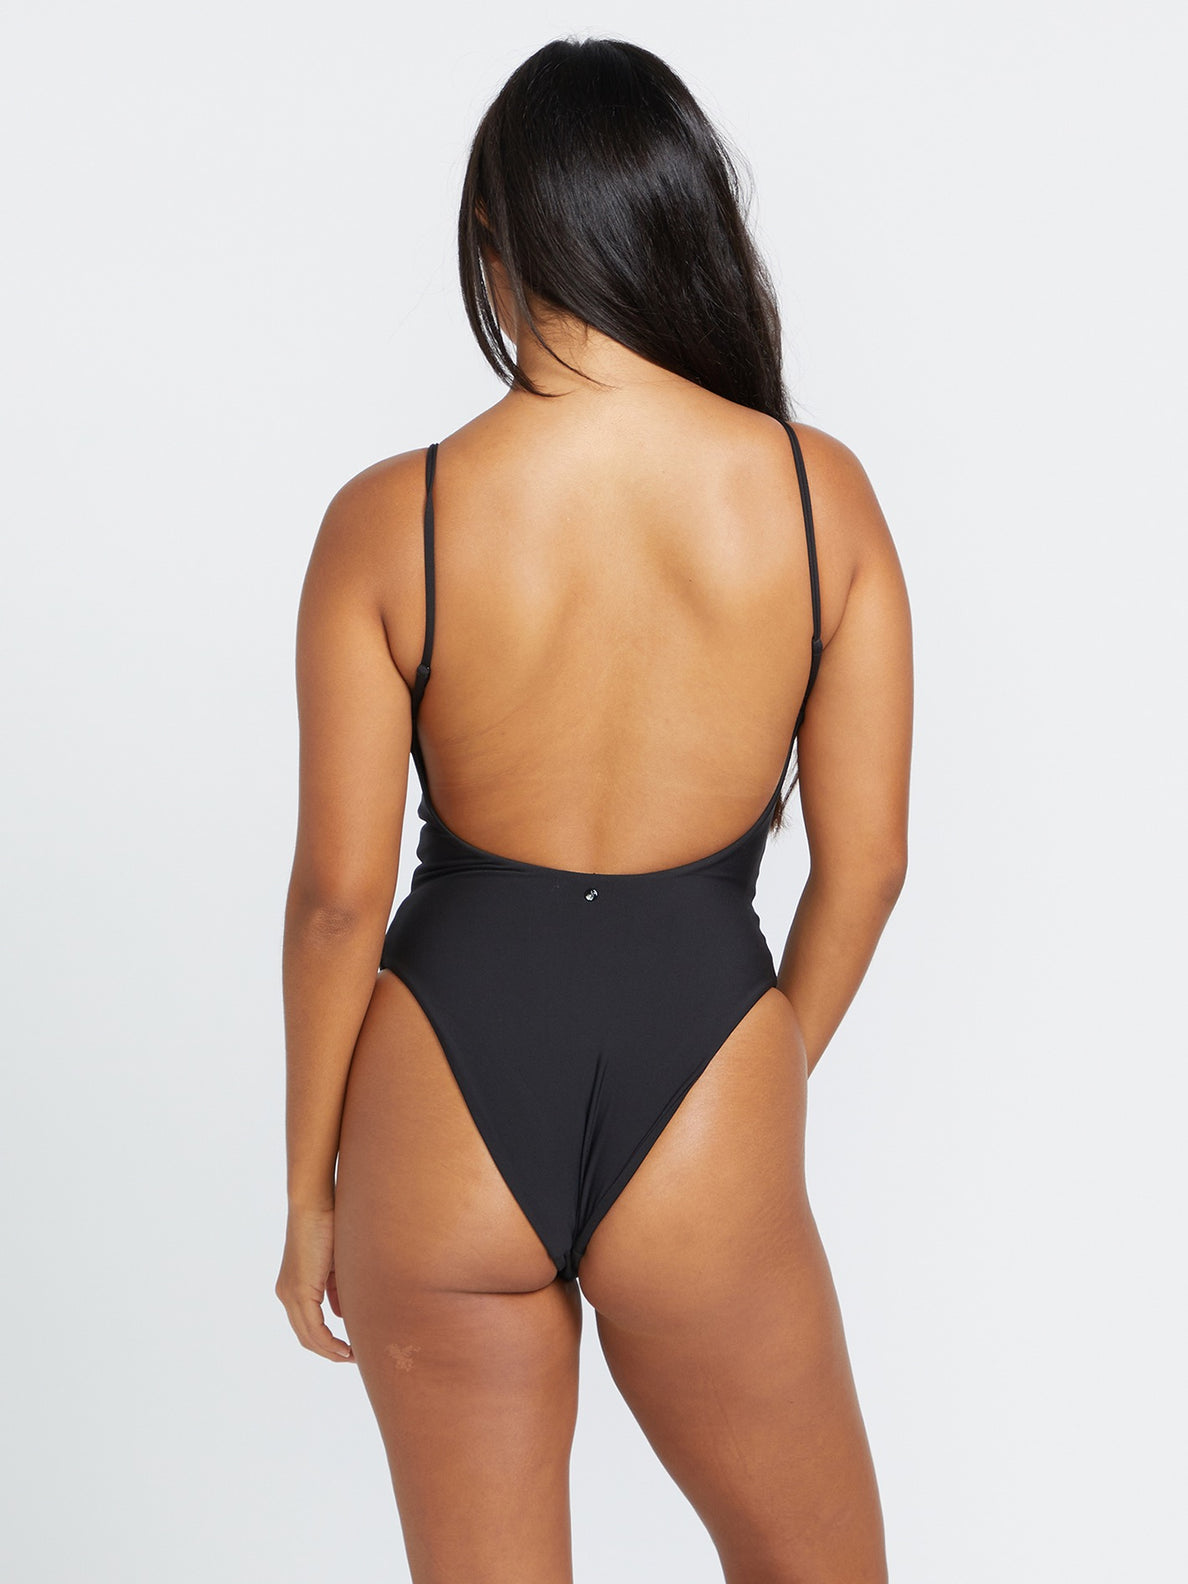 Simply Seamless One-Piece Swimsuit - Black